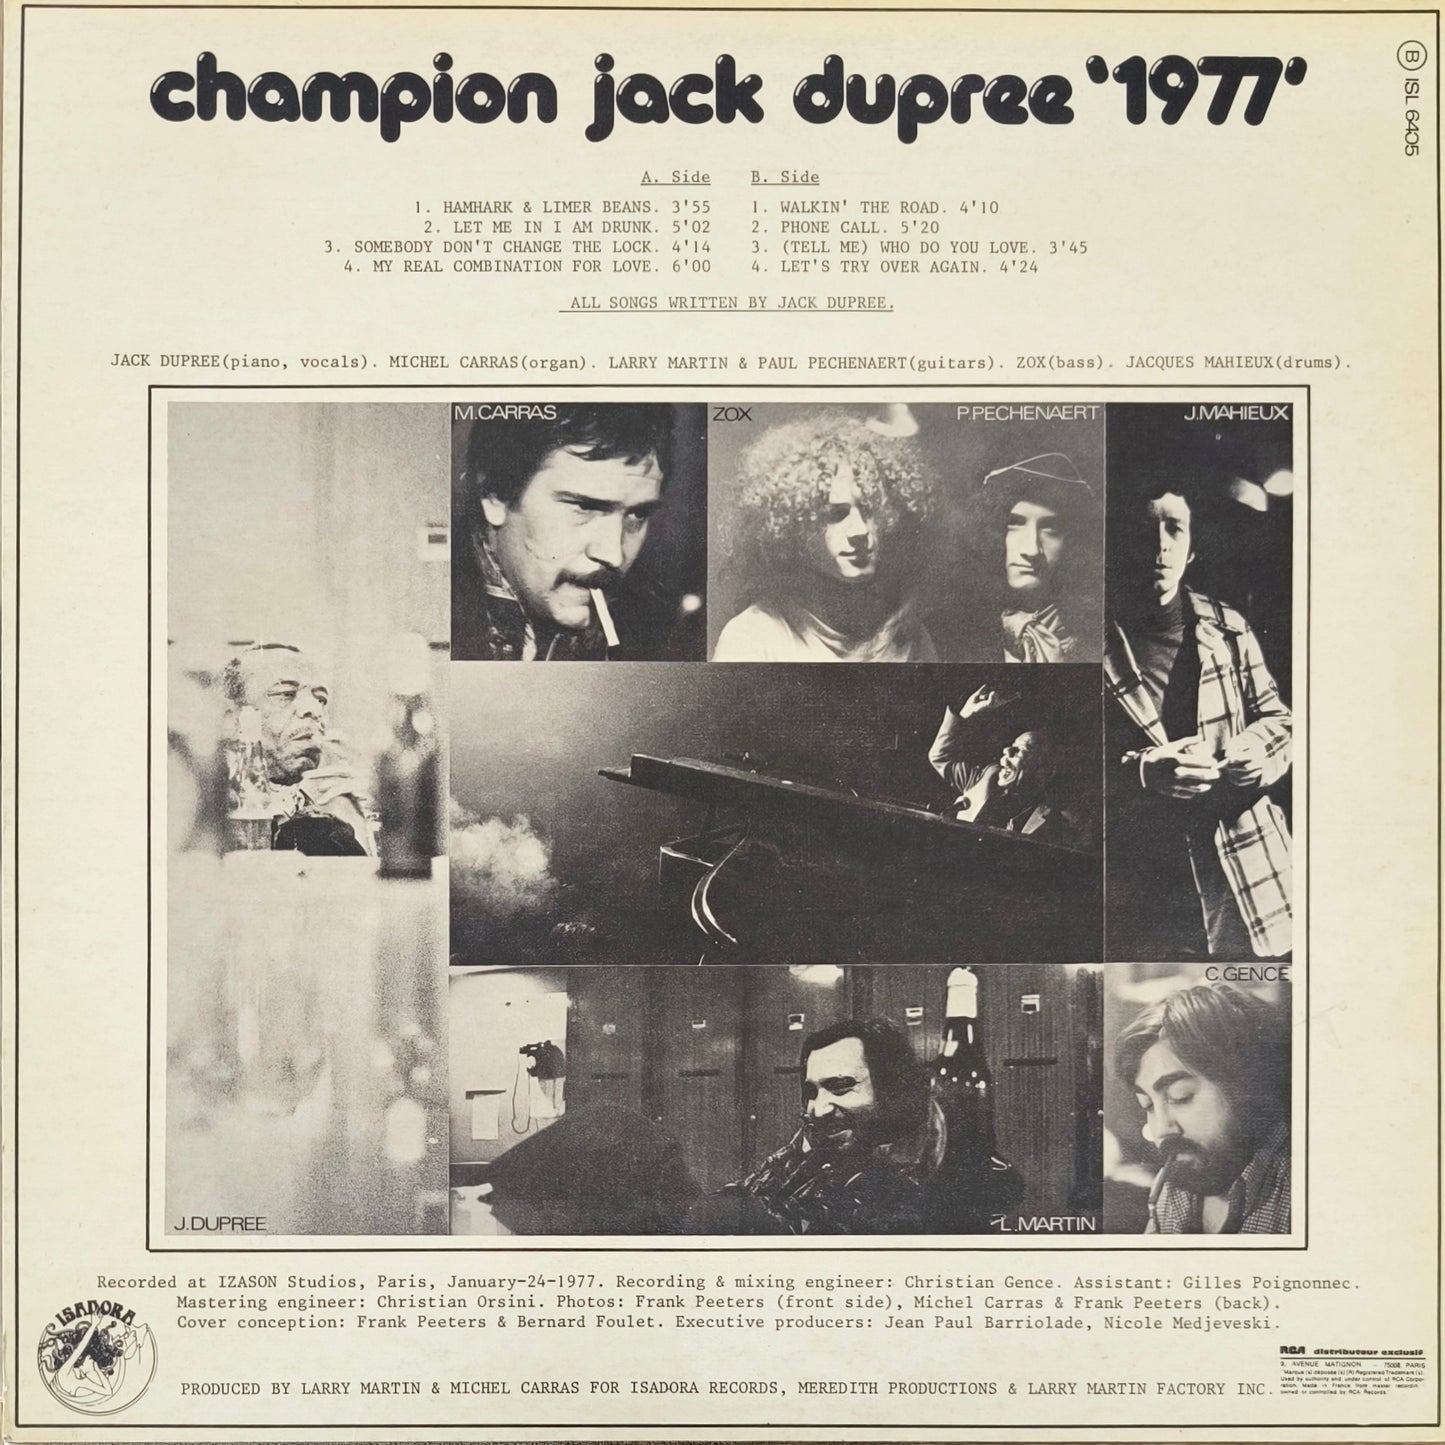 CHAMPION JACK DUPREE - "1977"